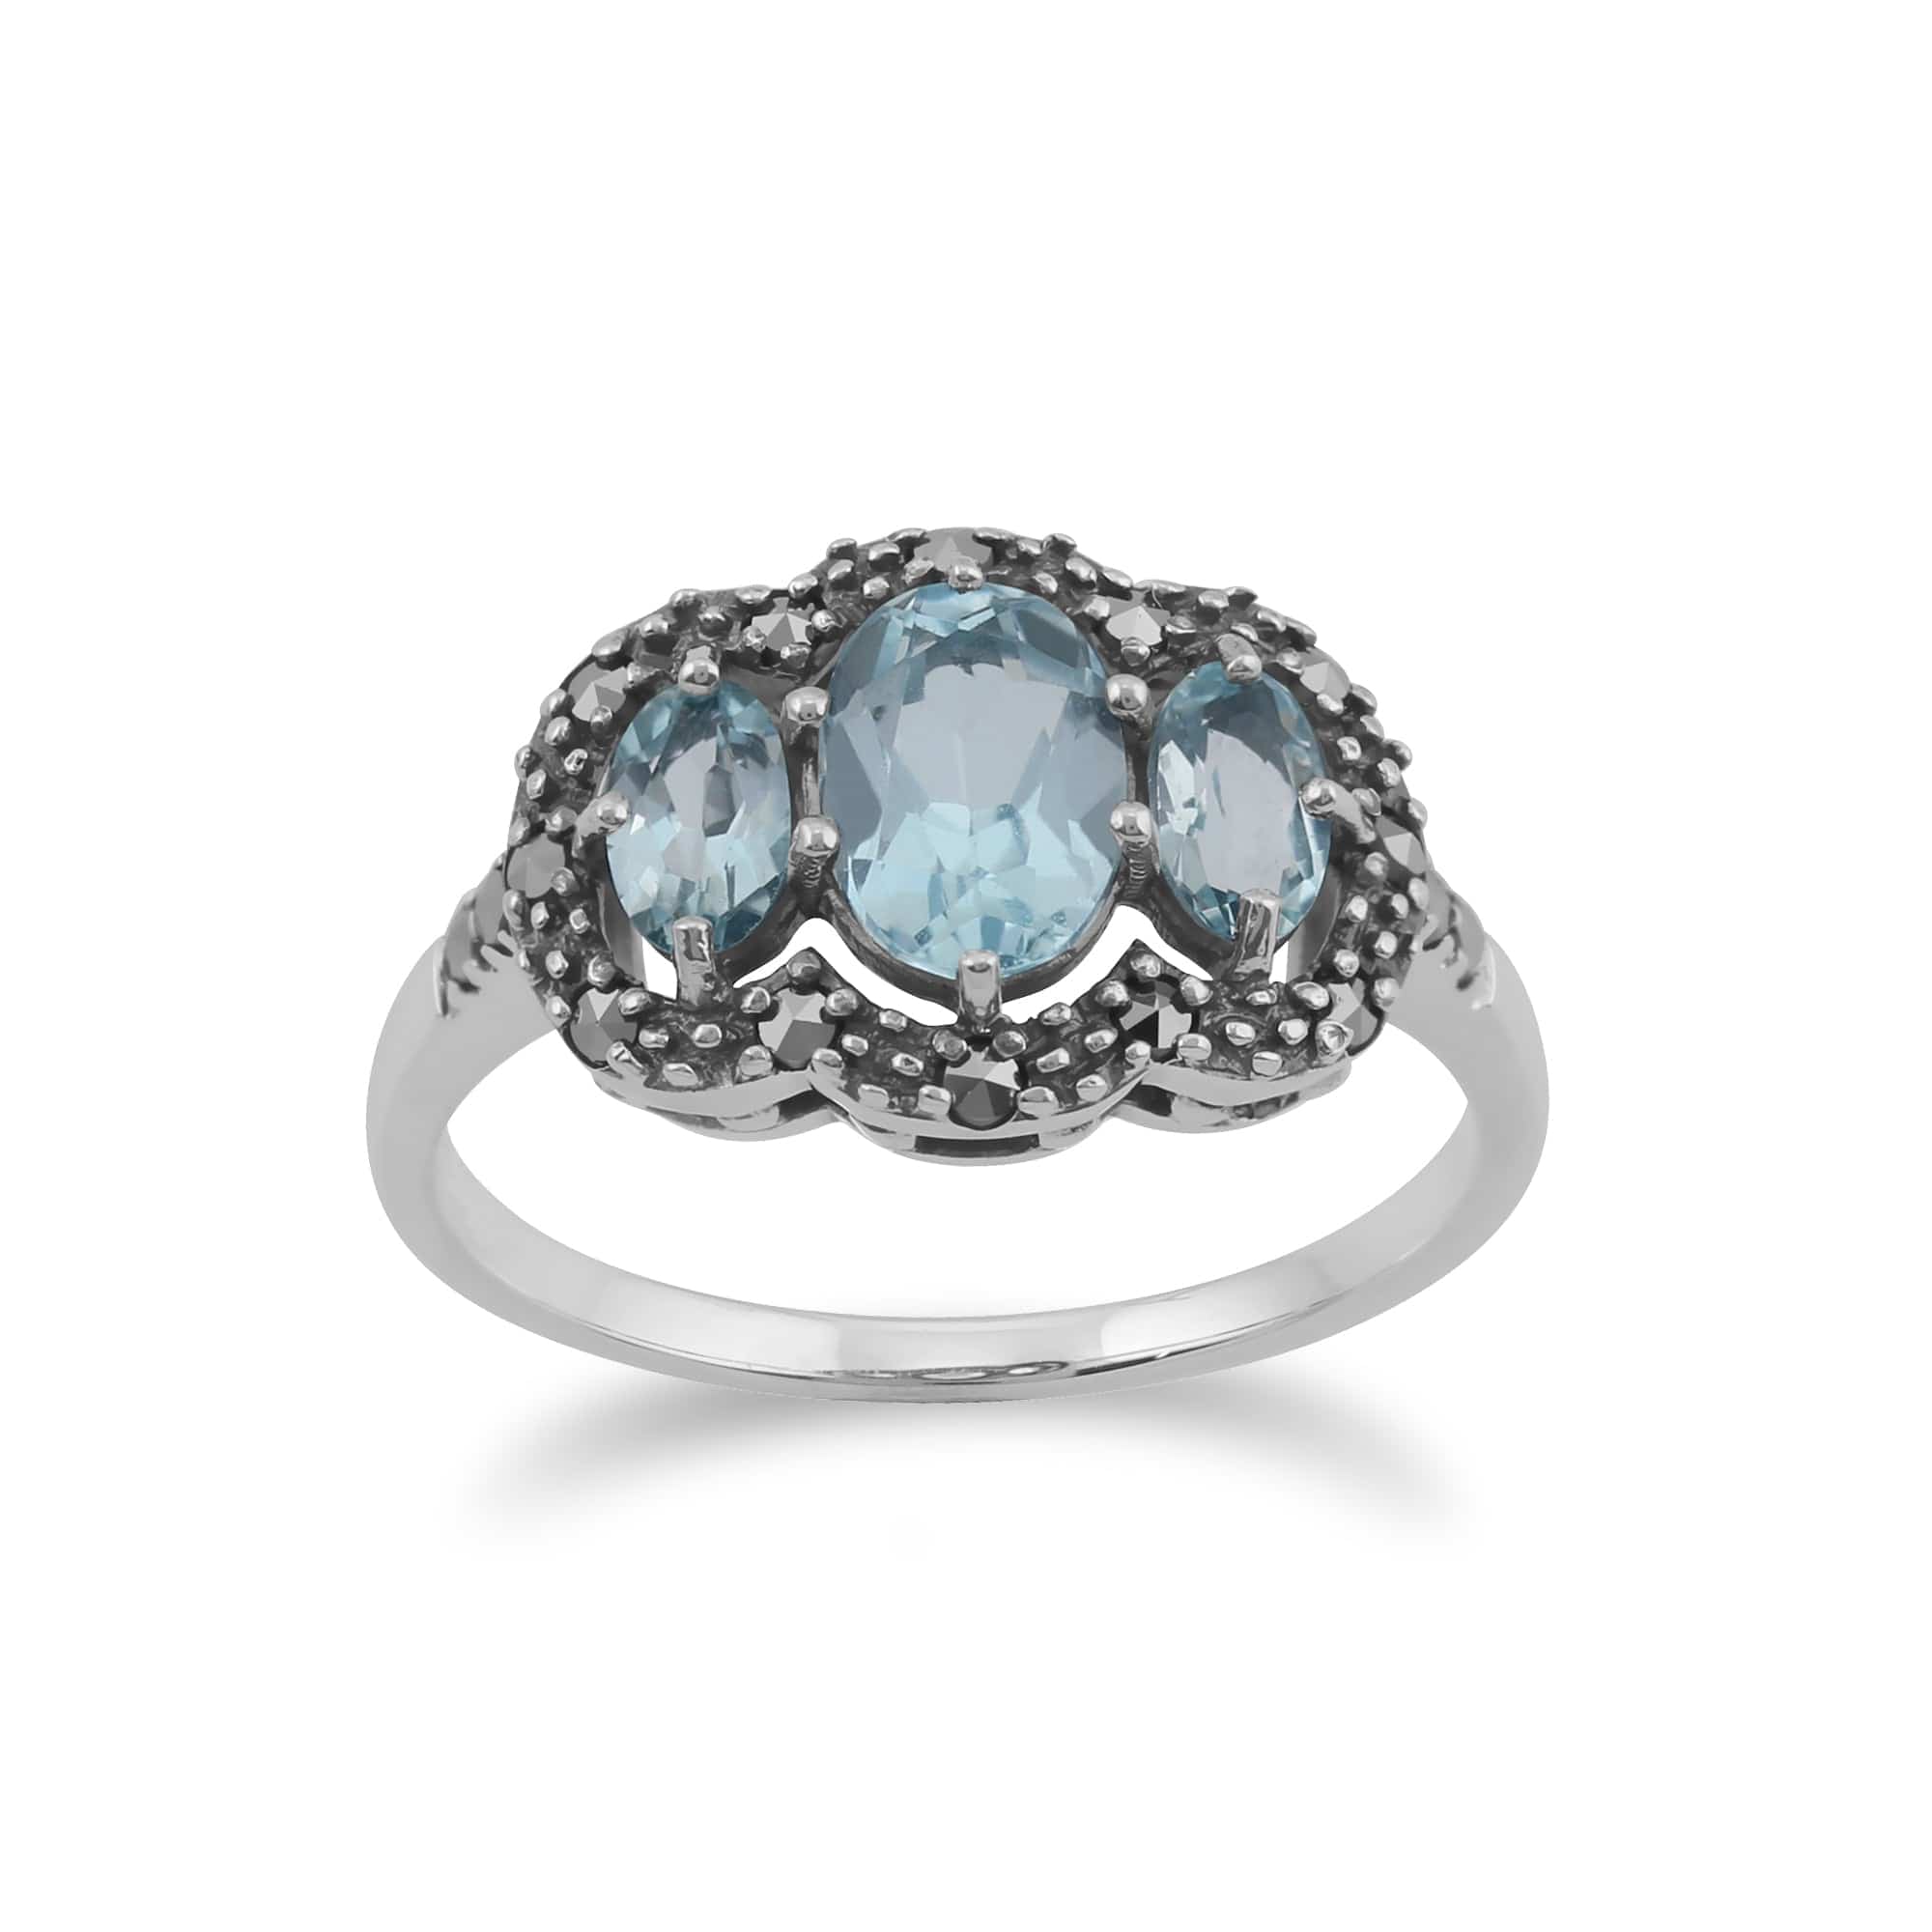 Gemondo Sterling Silver Blue Topaz & Marcasite Ring Image 1